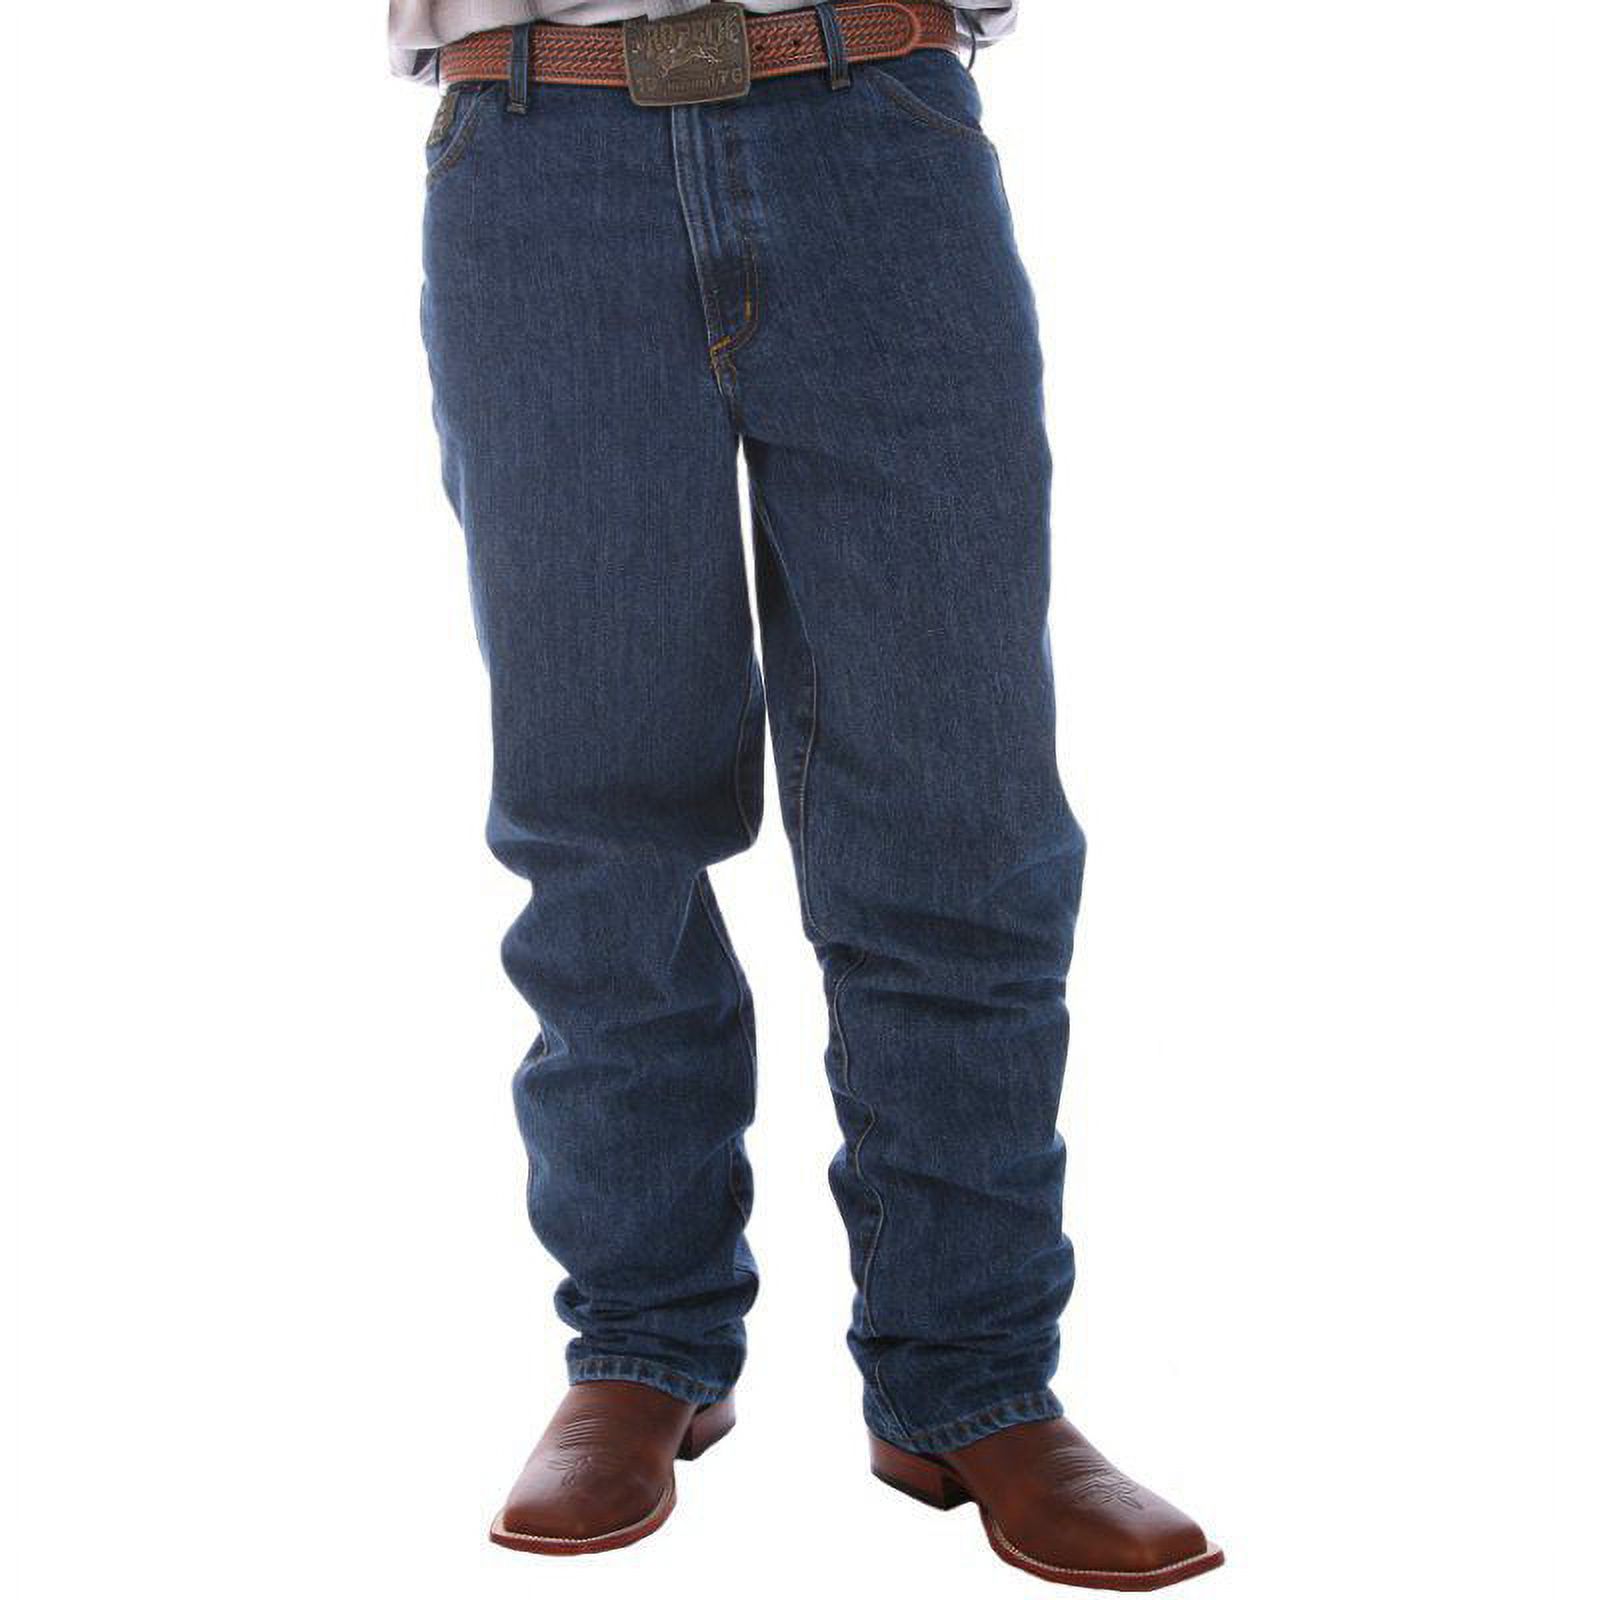 Cinch Apparel Mens Green Label Original Fit Jeans 29W x 38L Dark Stonewash - image 4 of 4